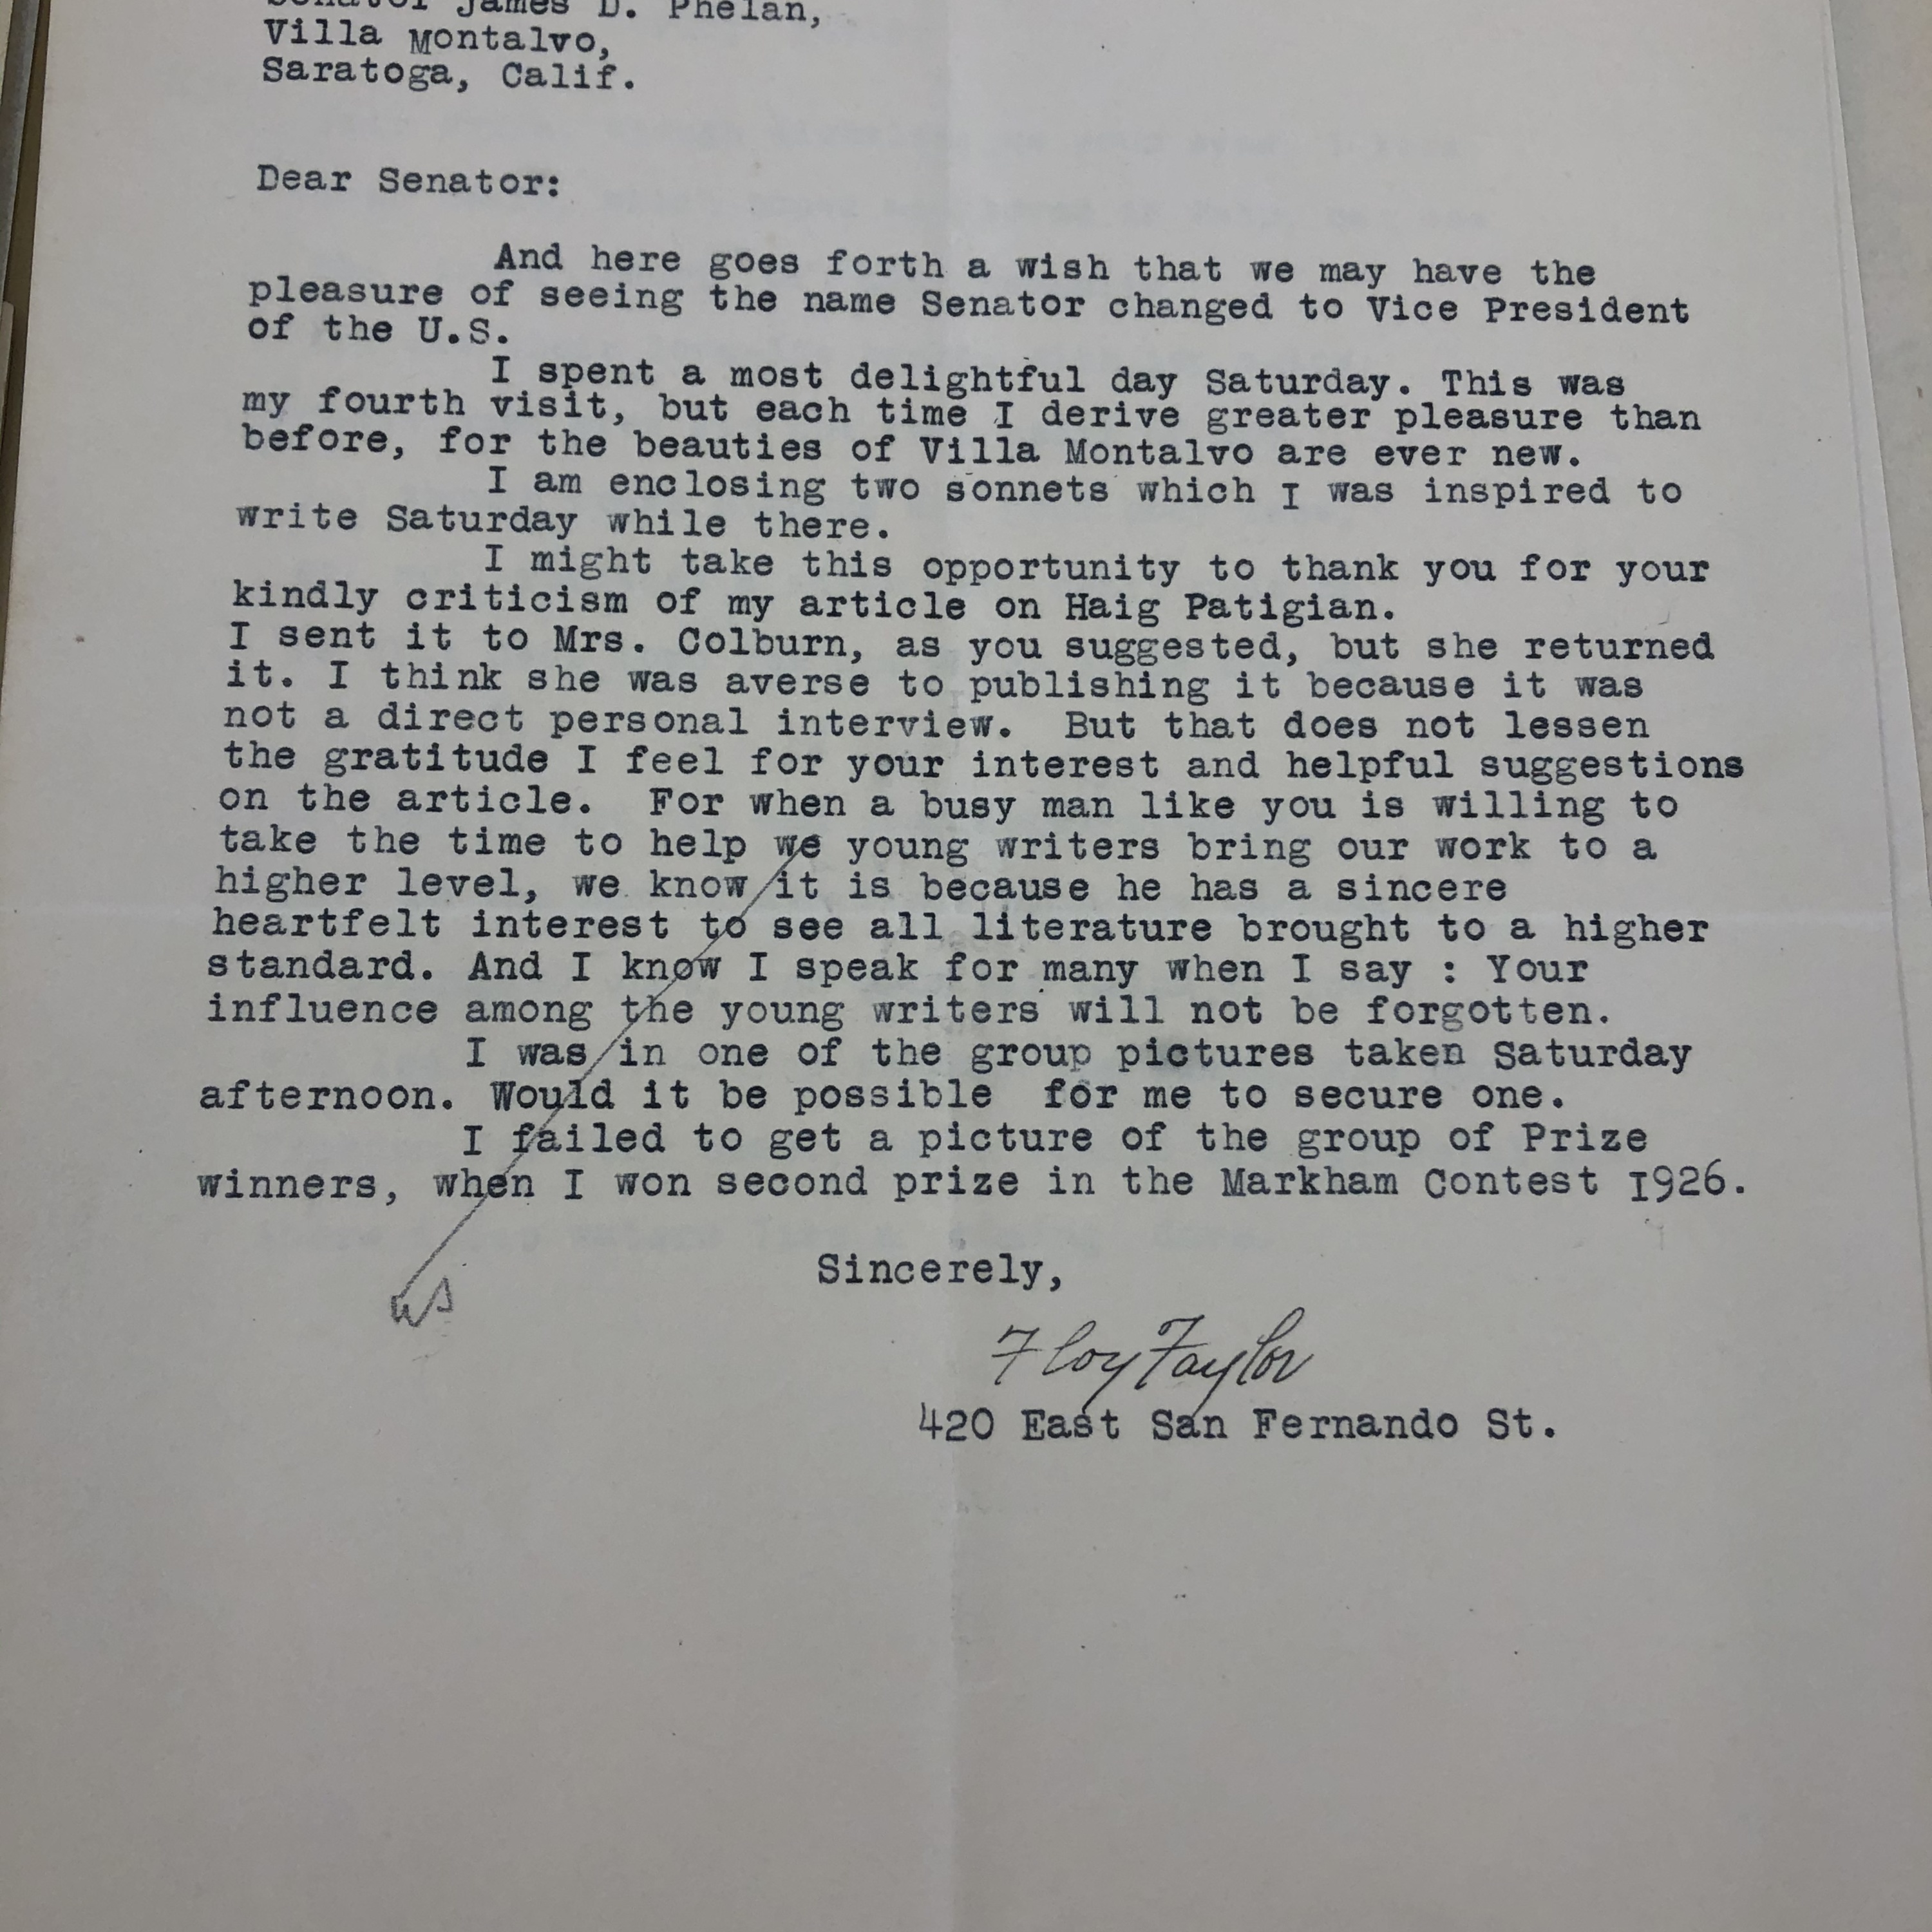 Letter from Floy Taylor to Senator James D. Phelan